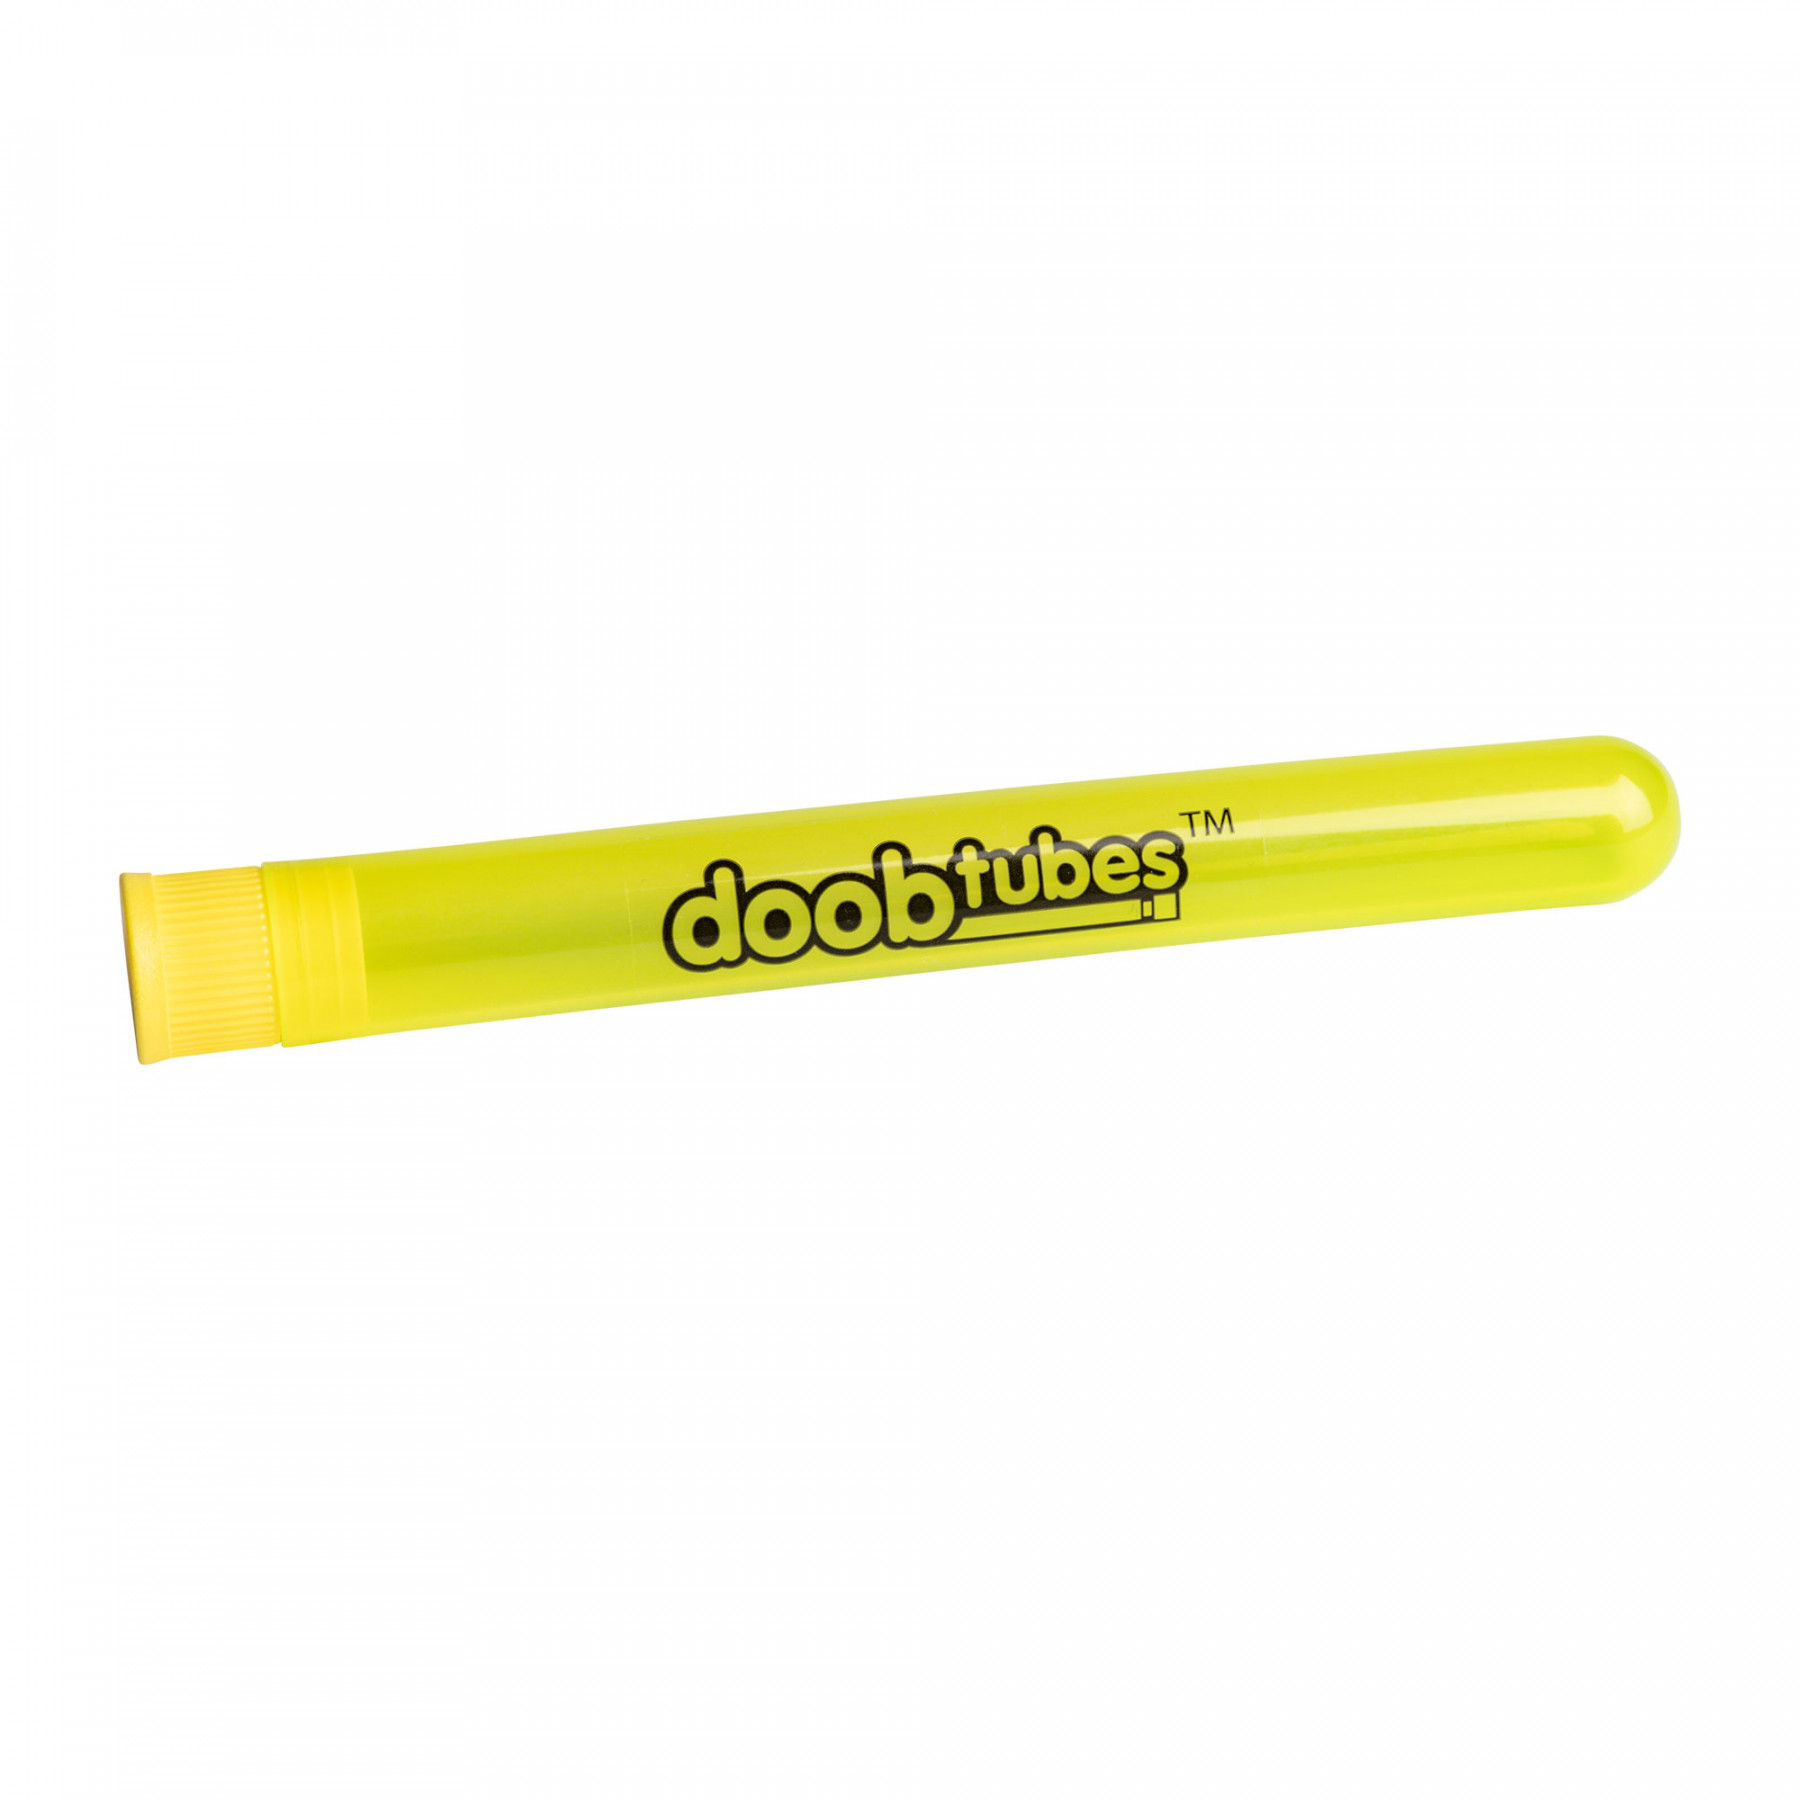 5" Doob Tubes (Box of 25)